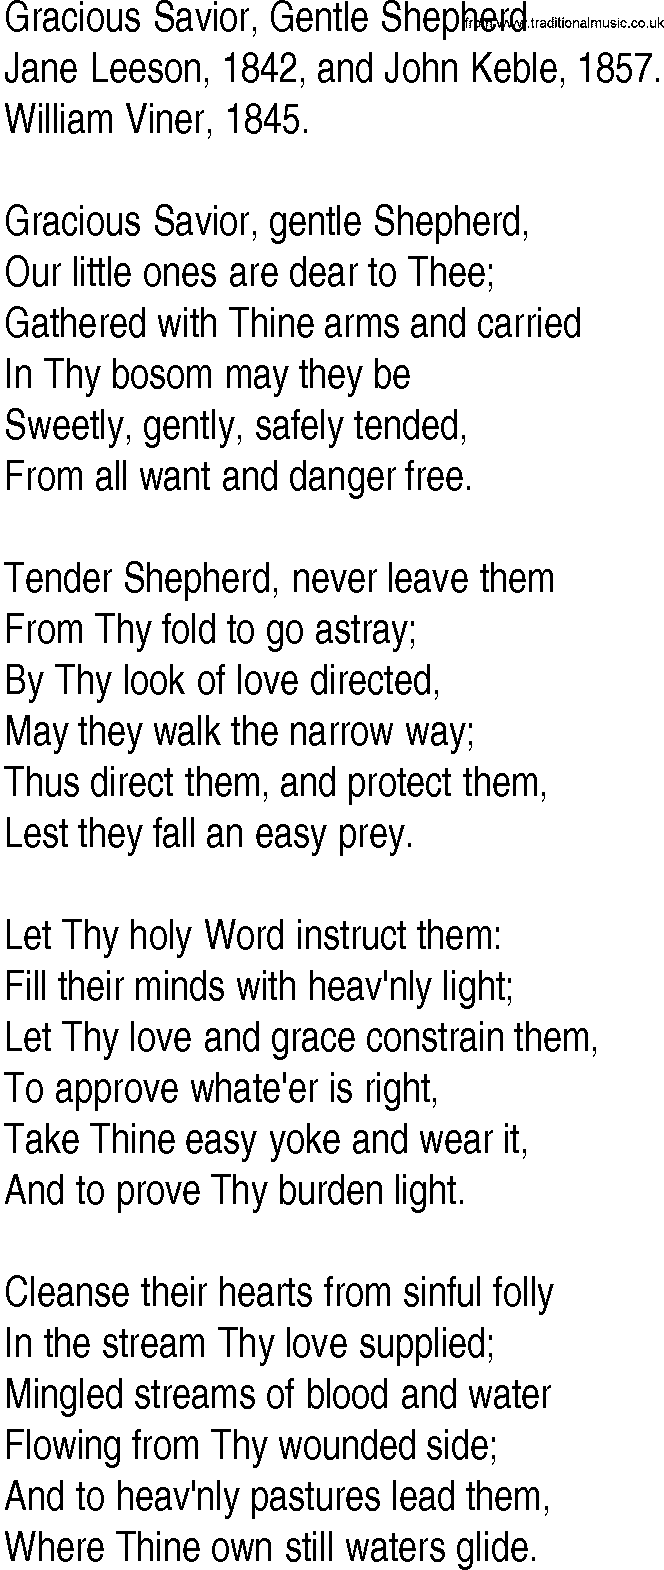 Hymn and Gospel Song: Gracious Savior, Gentle Shepherd by Jane Leeson  and John Keble lyrics